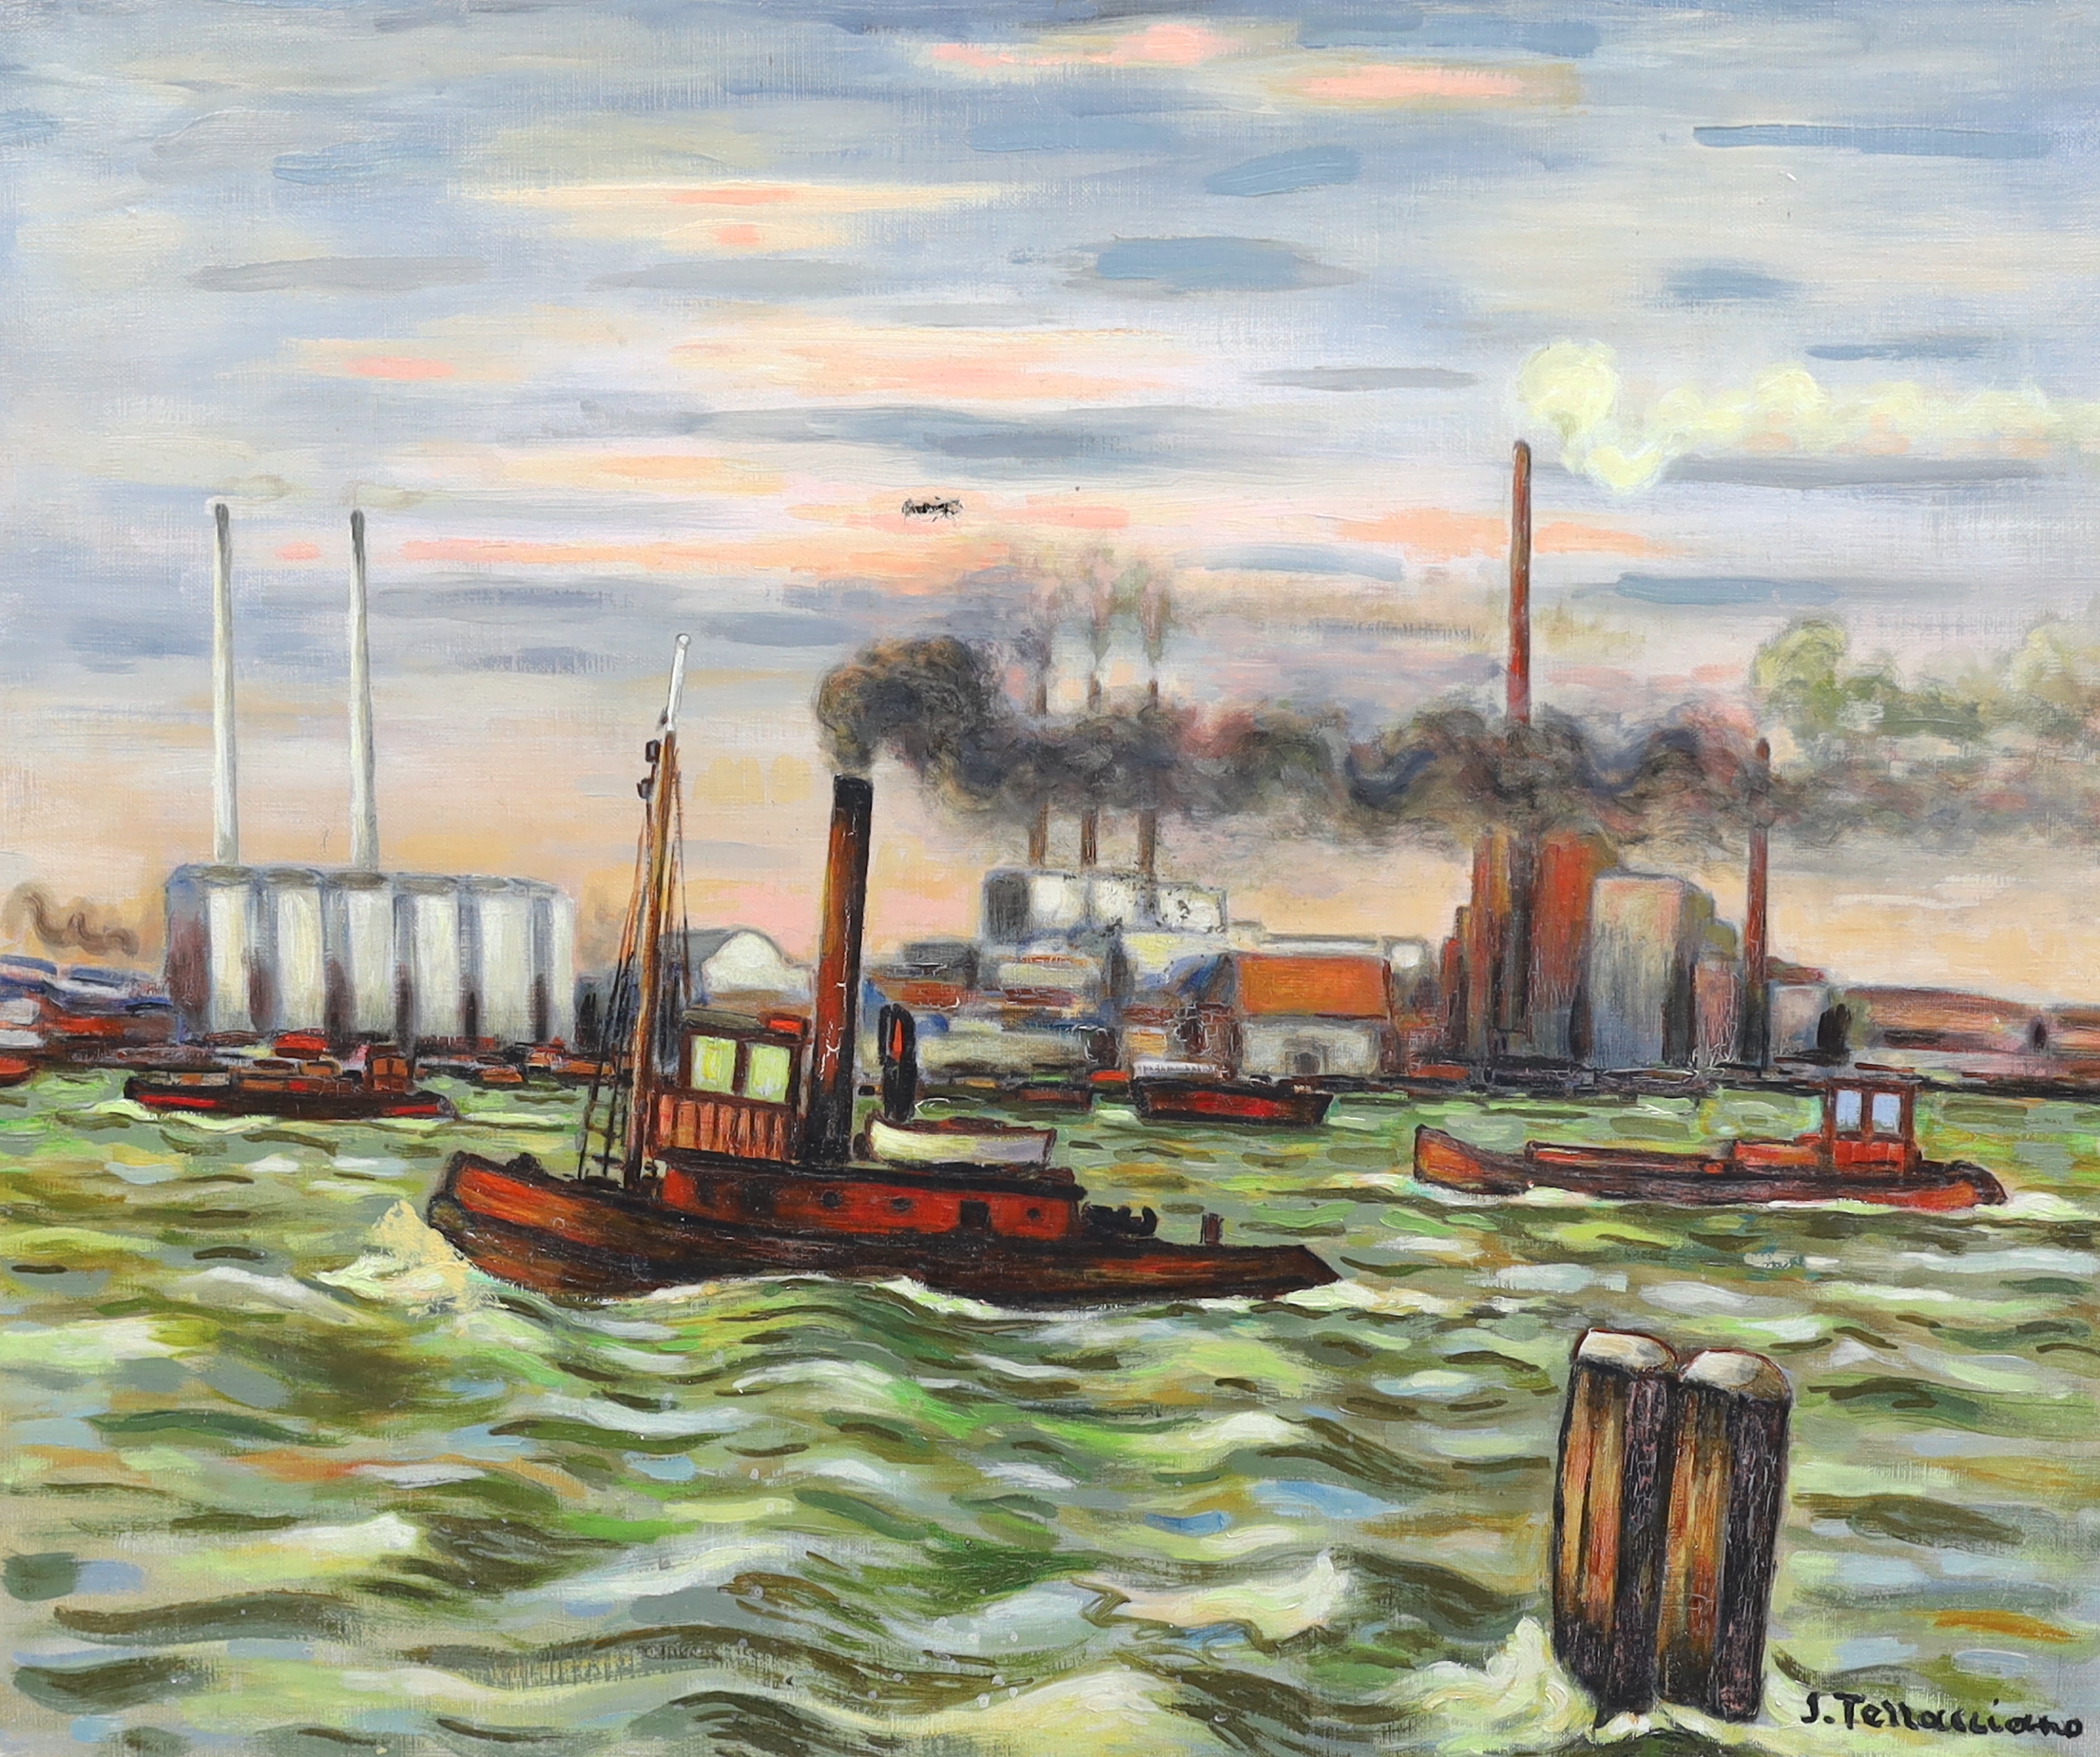 Sauveur Terracciano (Algerian, 1908-1991), 'Port d'Amsterdam', oil on canvas, 54 x 65cm